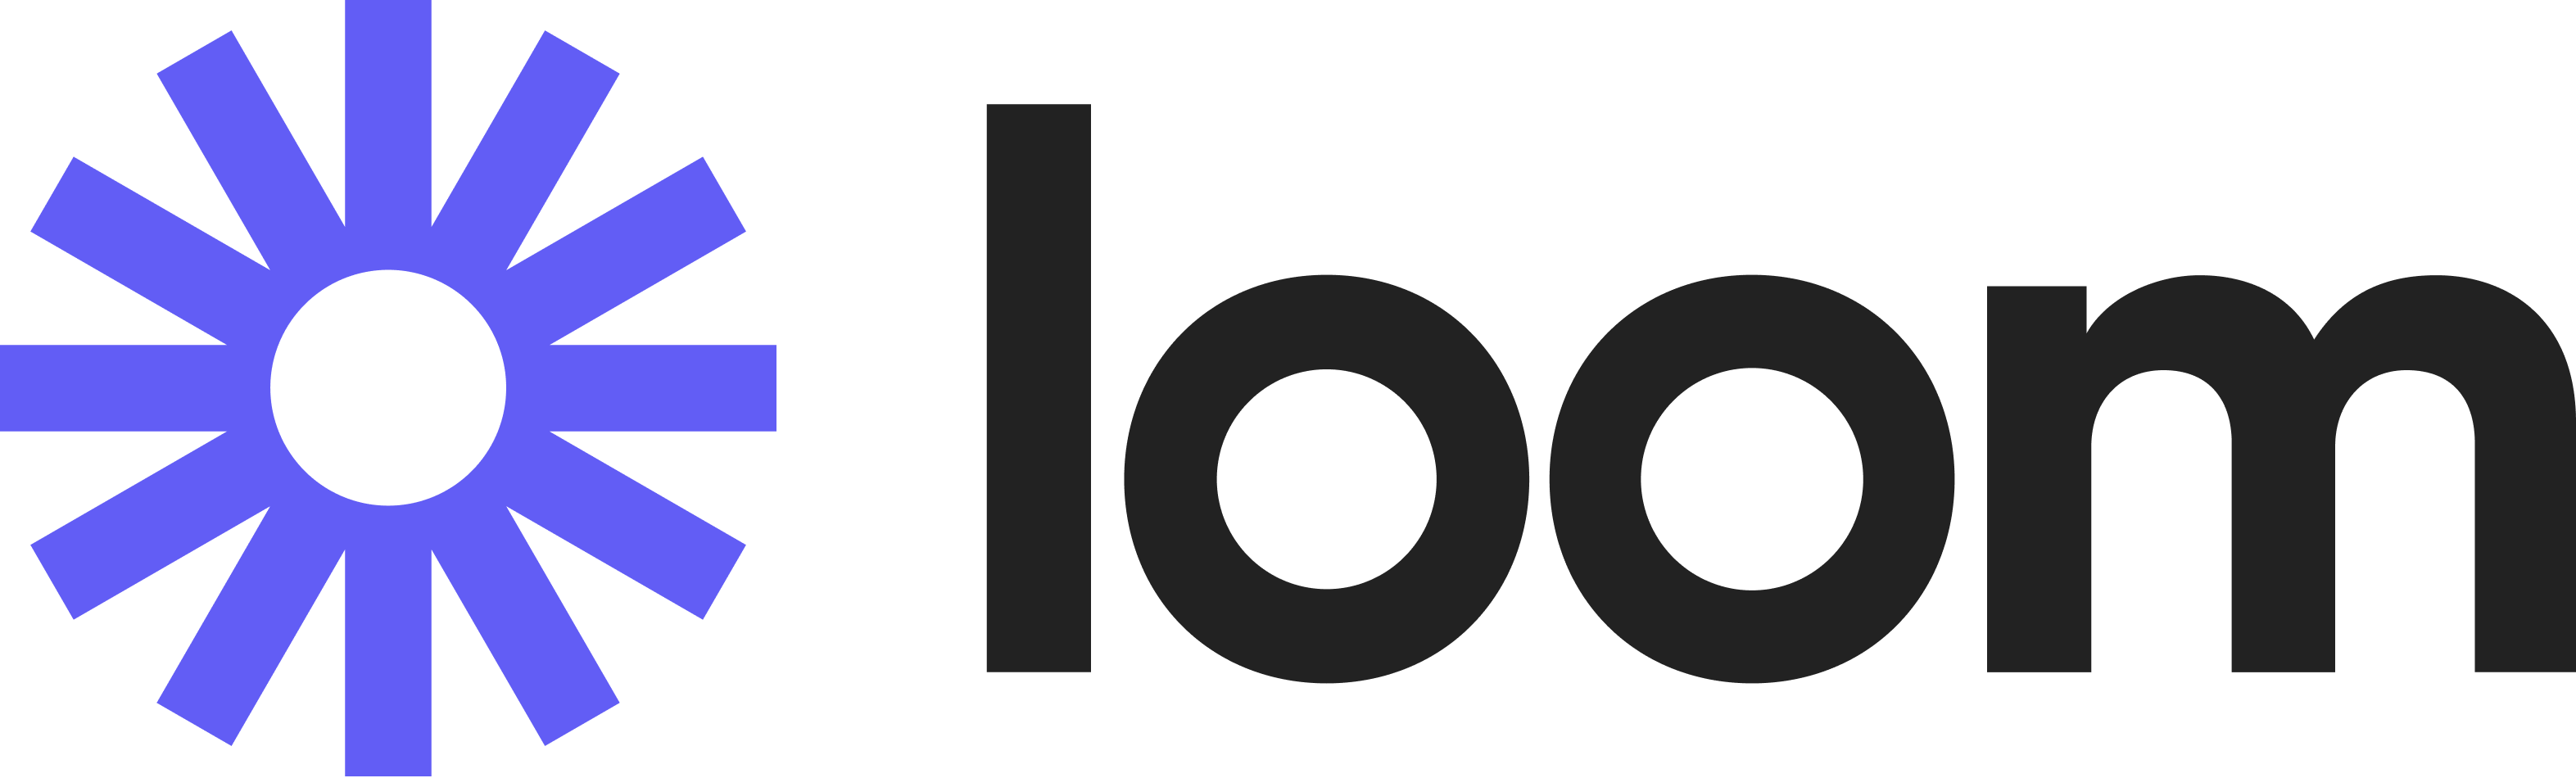 Loom logo lockup color